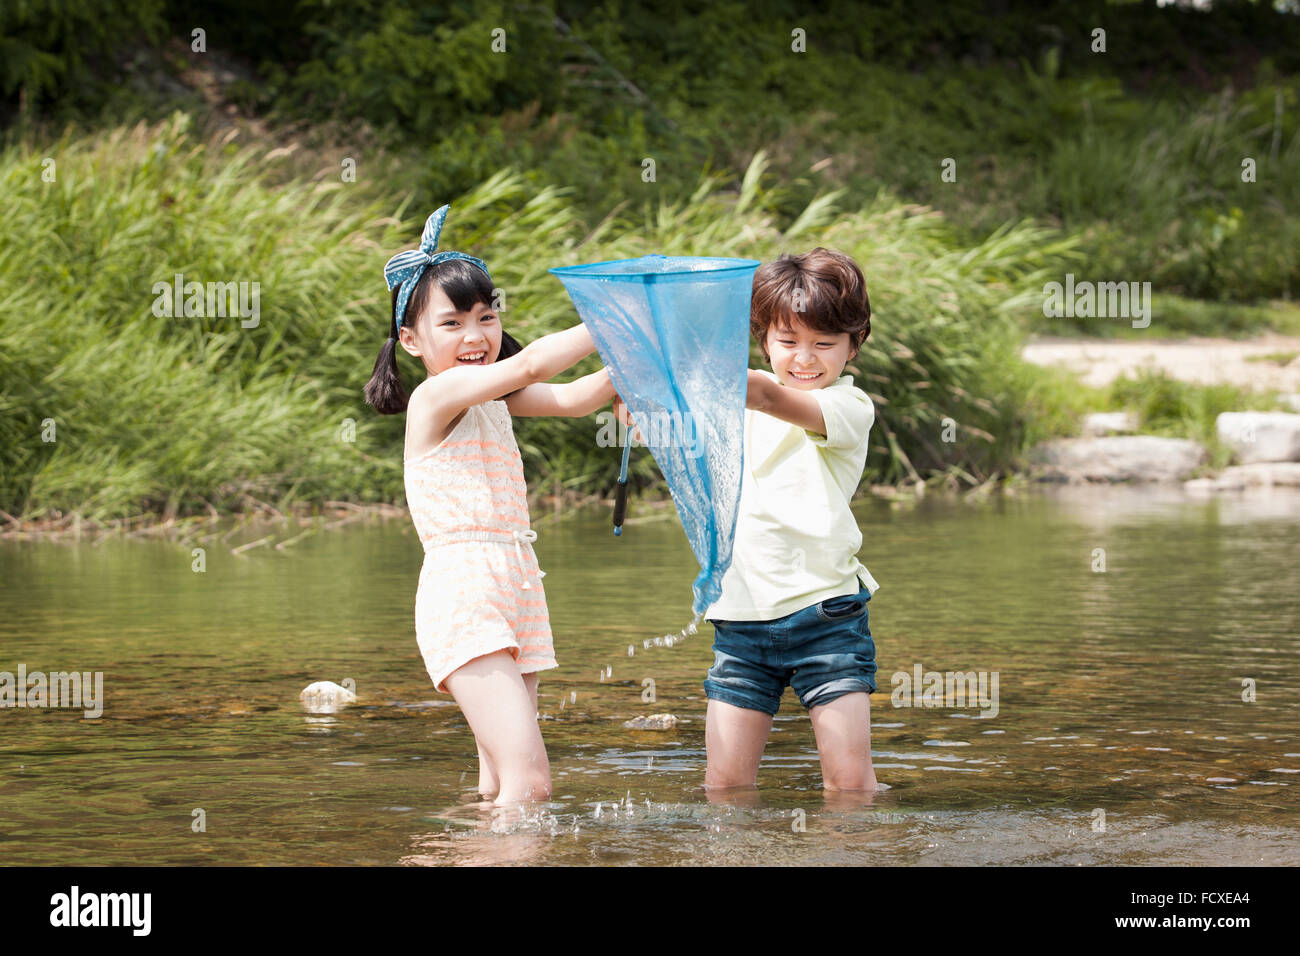 1,496 Child Fishing Net Stock Photos - Free & Royalty-Free Stock